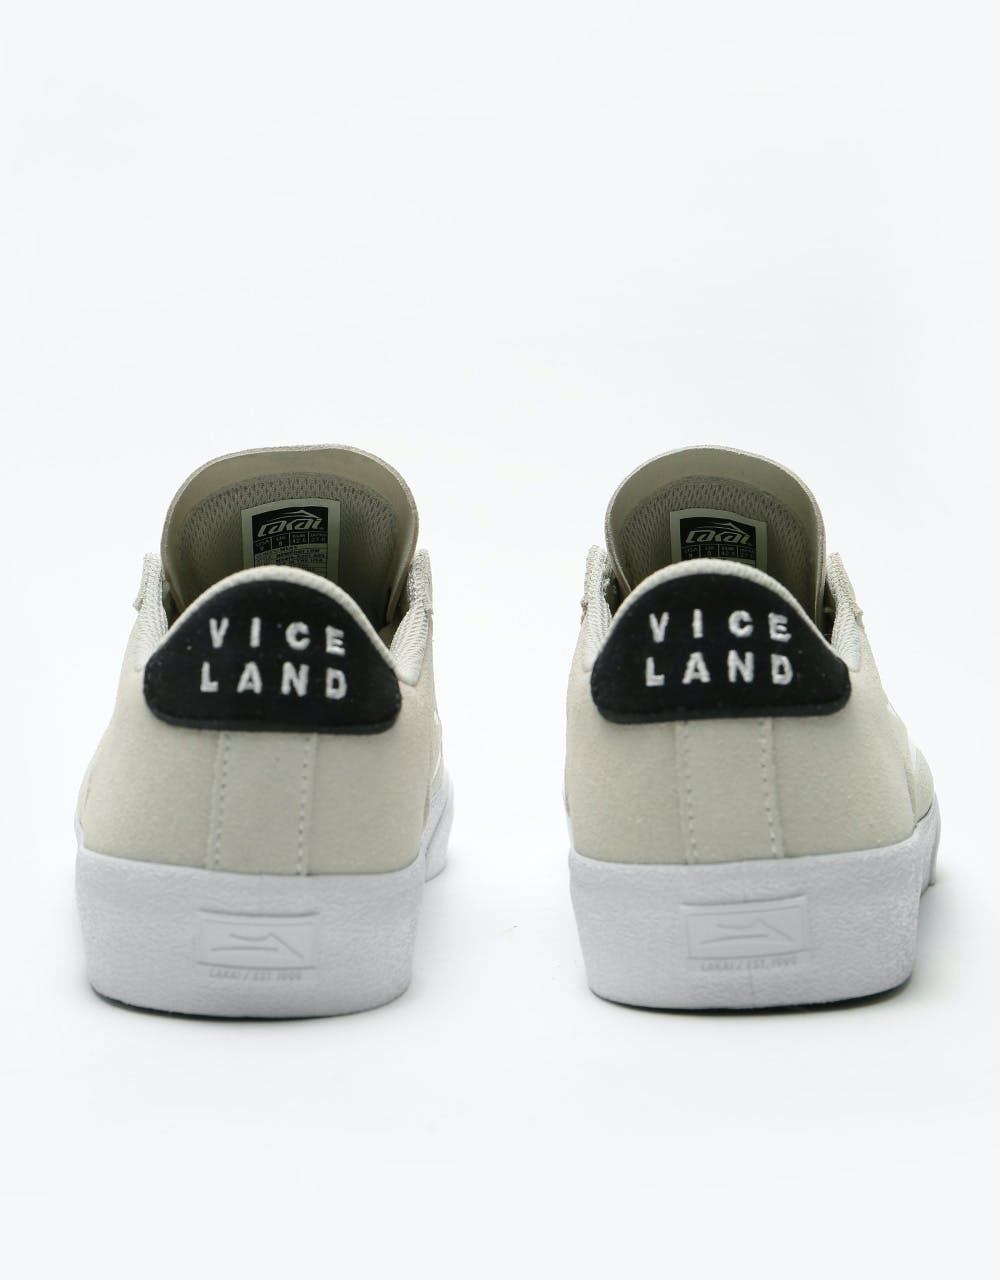 Lakai x Viceland Newport Skate Shoes - White Suede